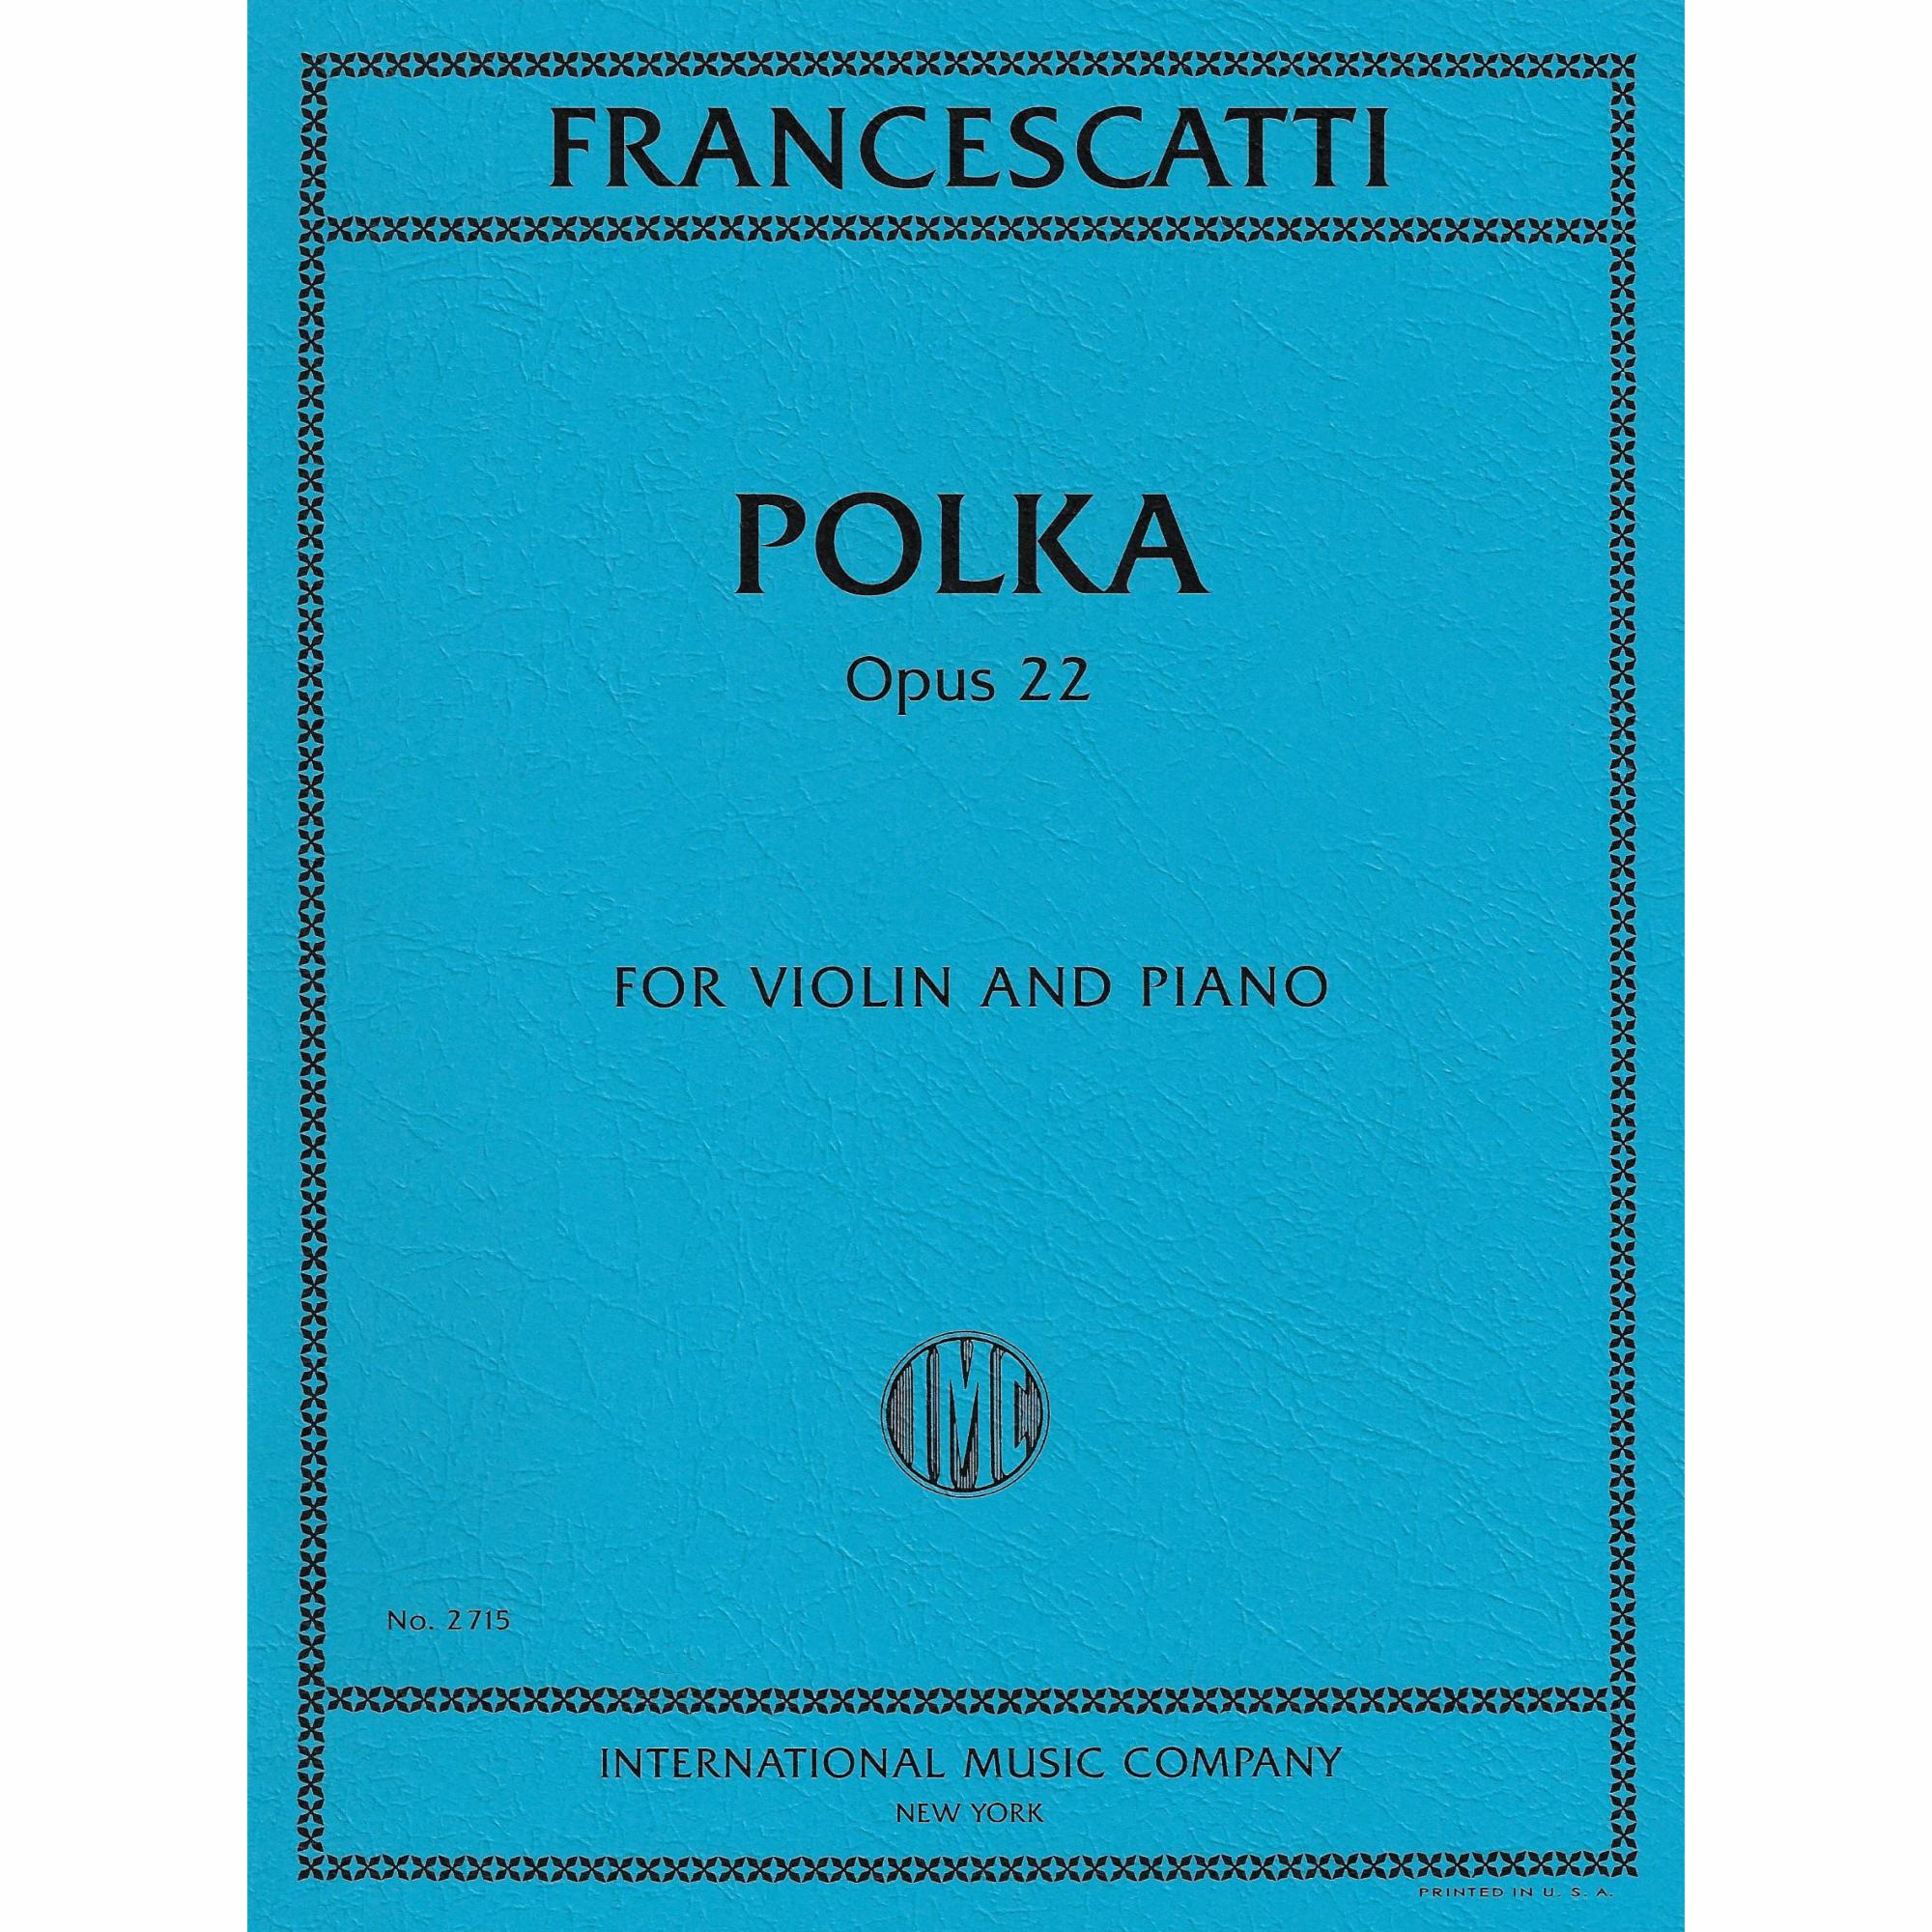 Francescatti -- Polka, Op. 22 for Violin and Piano